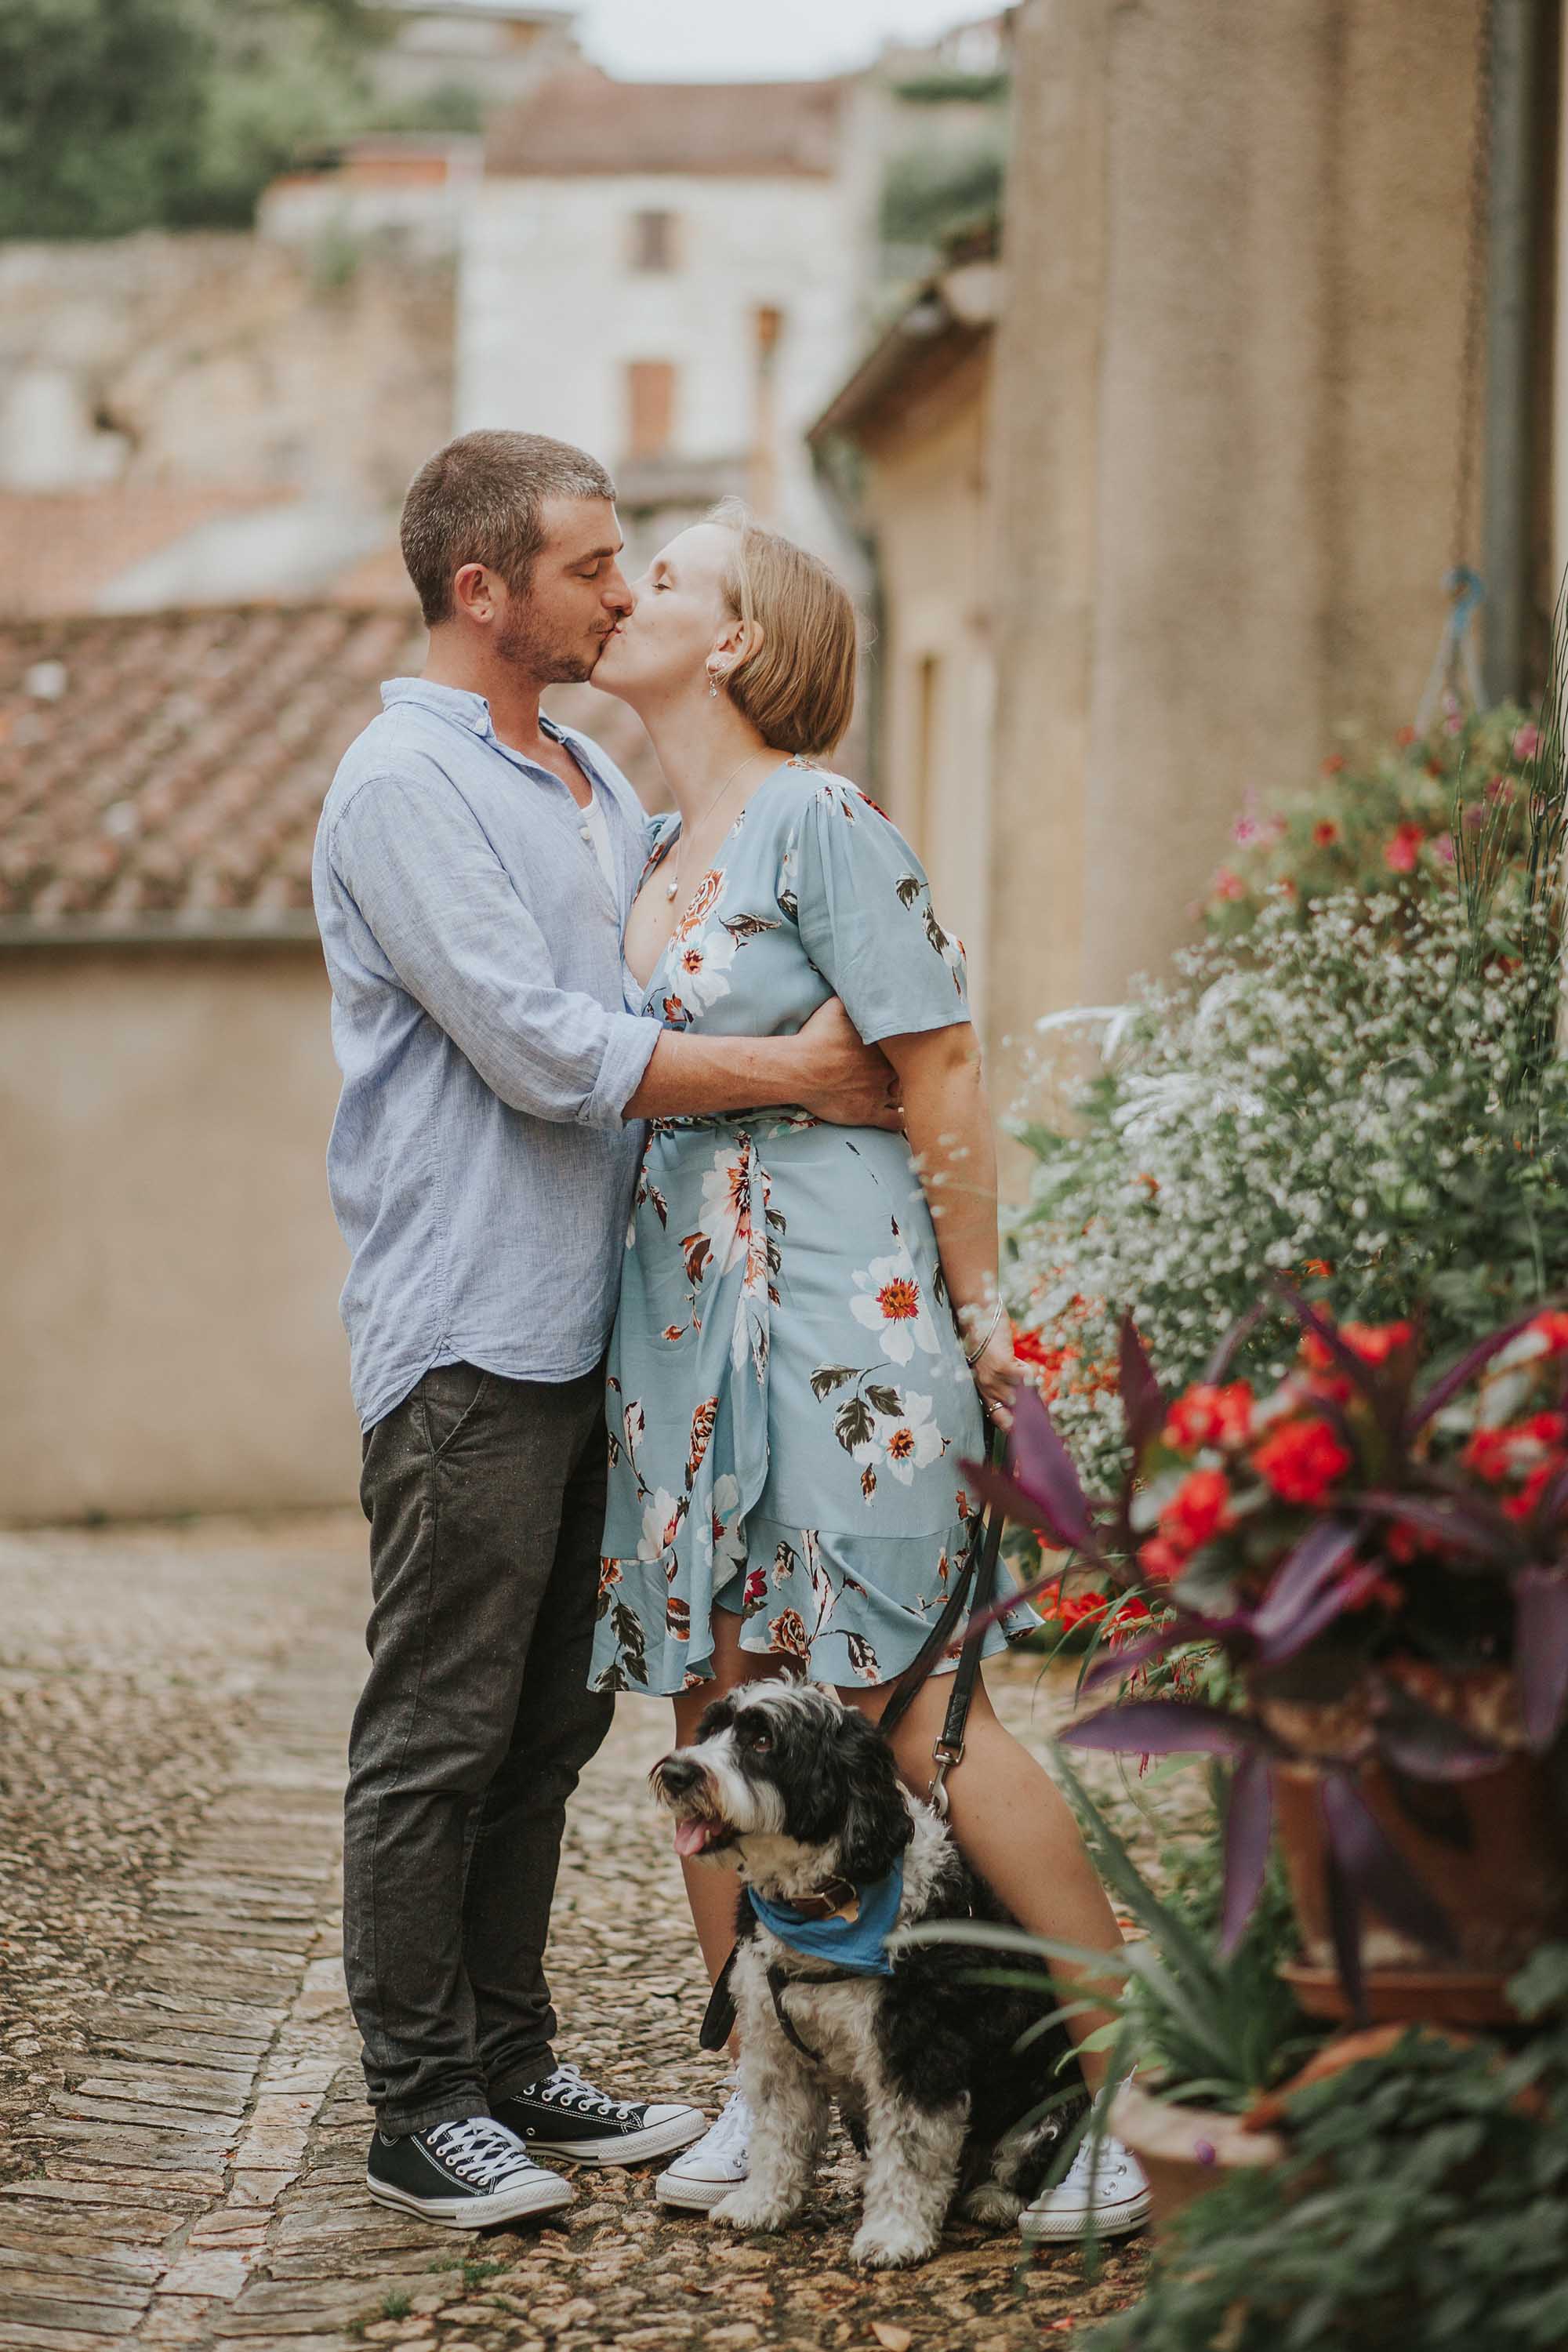 Wedding photographer in Dordogne